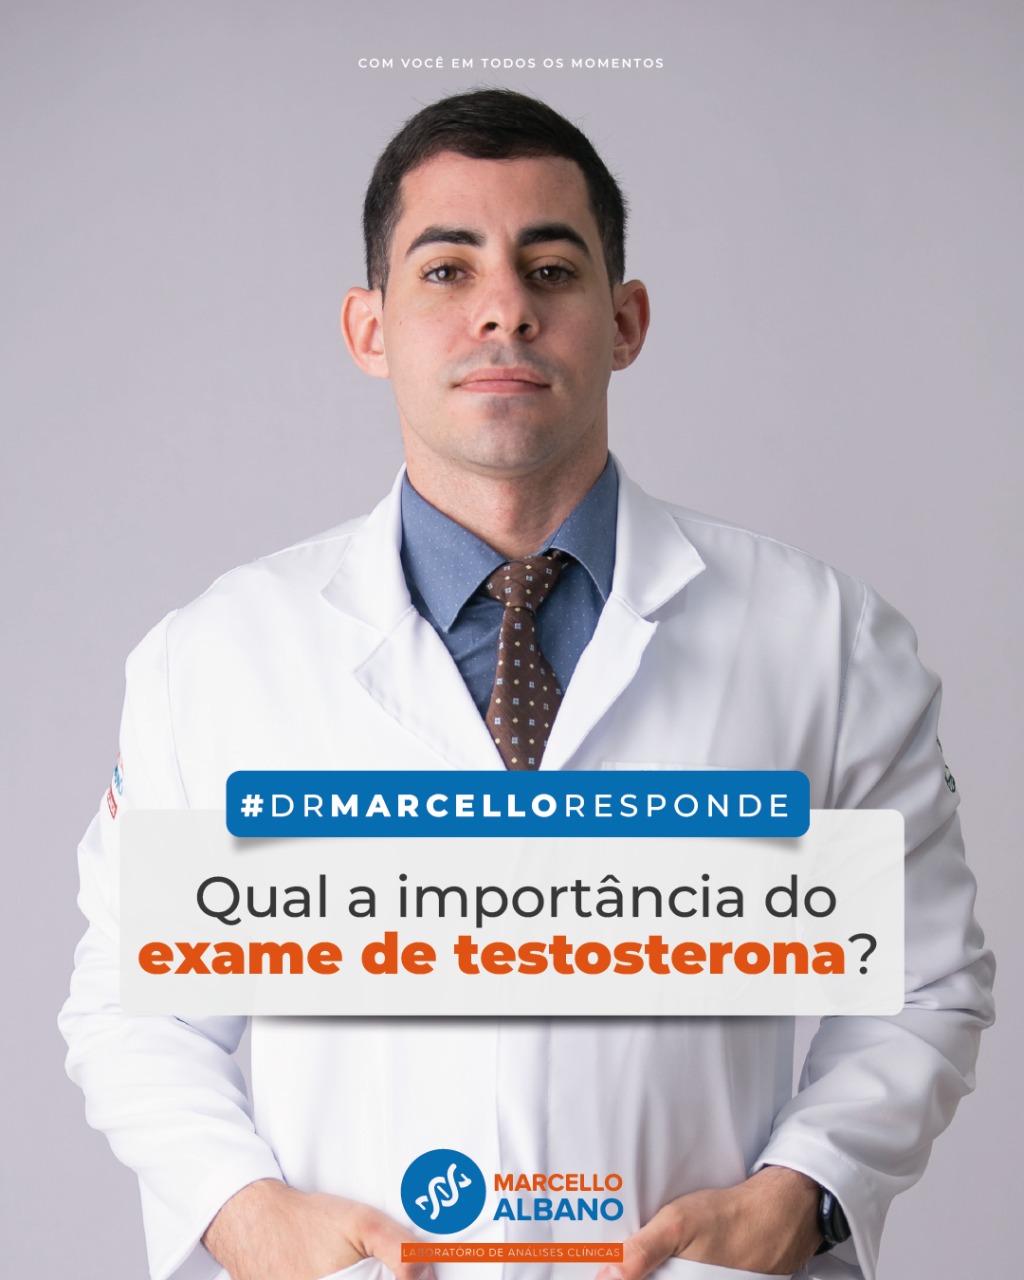 Dr Marcello responde: Qual a importância do exame de Testosterona?